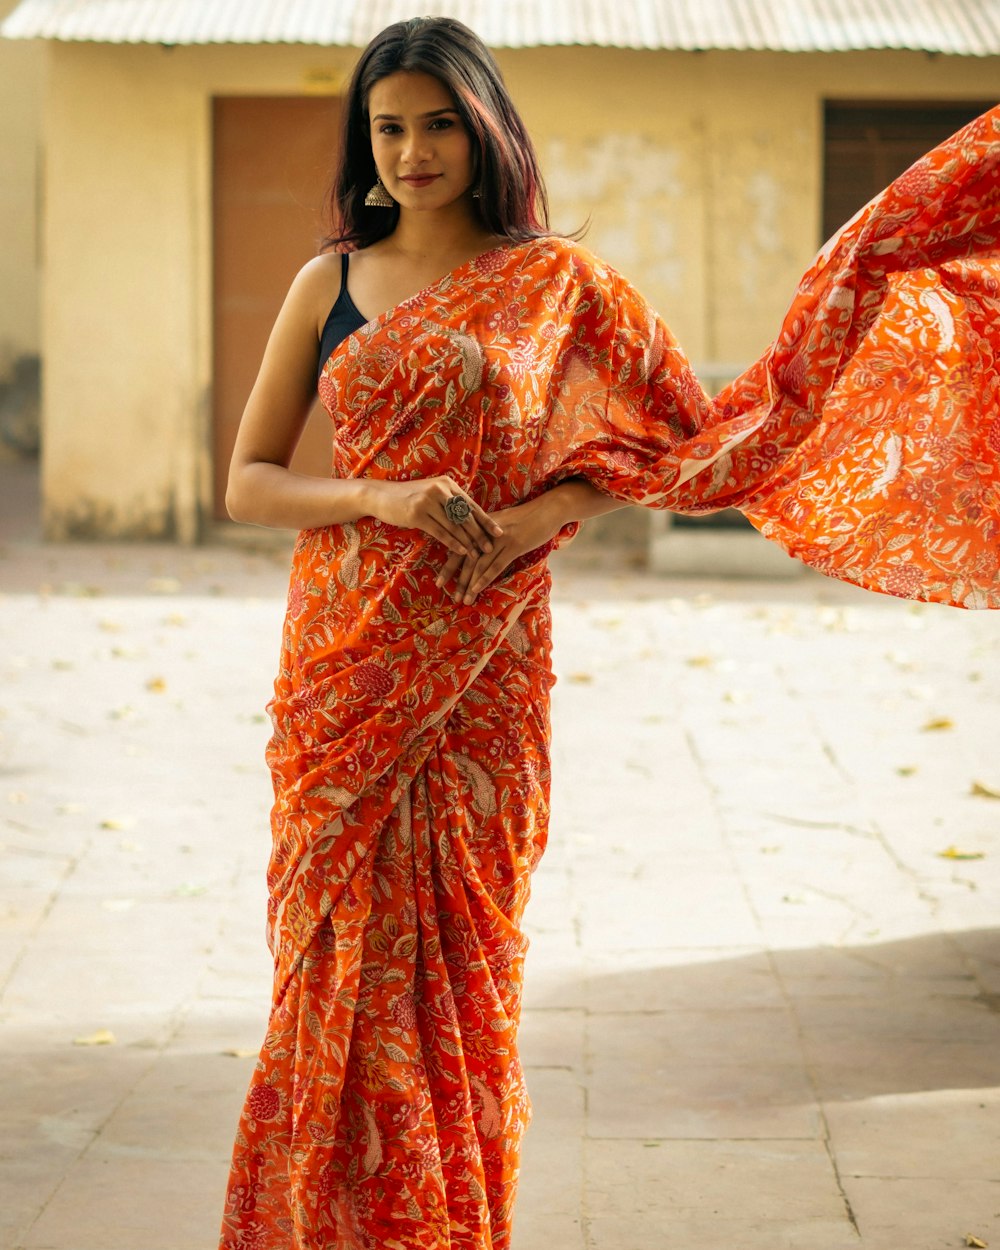 a woman in an orange and white sari